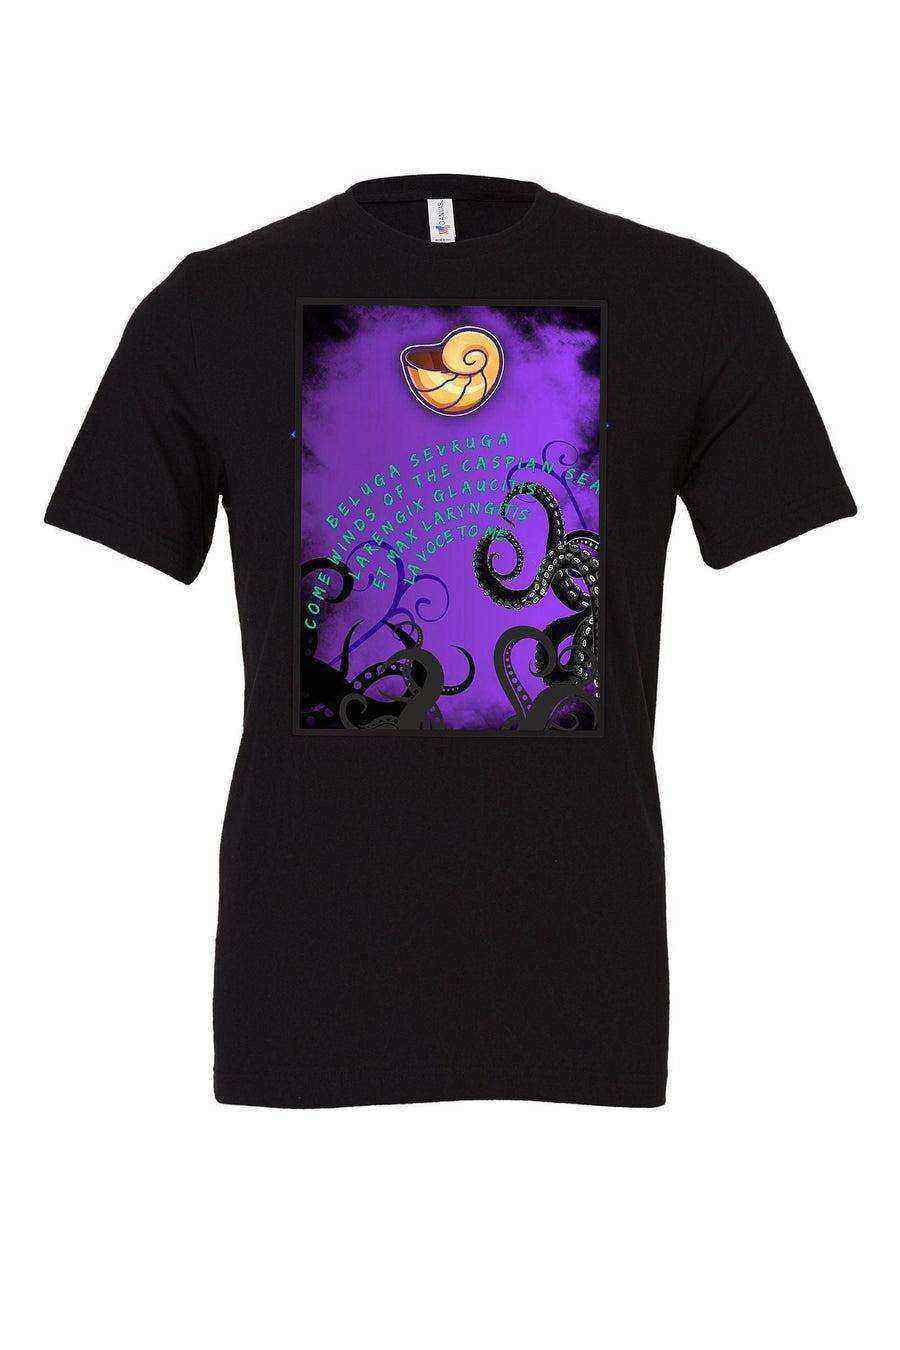 Ursulas Spell Shirt | Poor Unfortunate Souls Shirt - Dylan's Tees